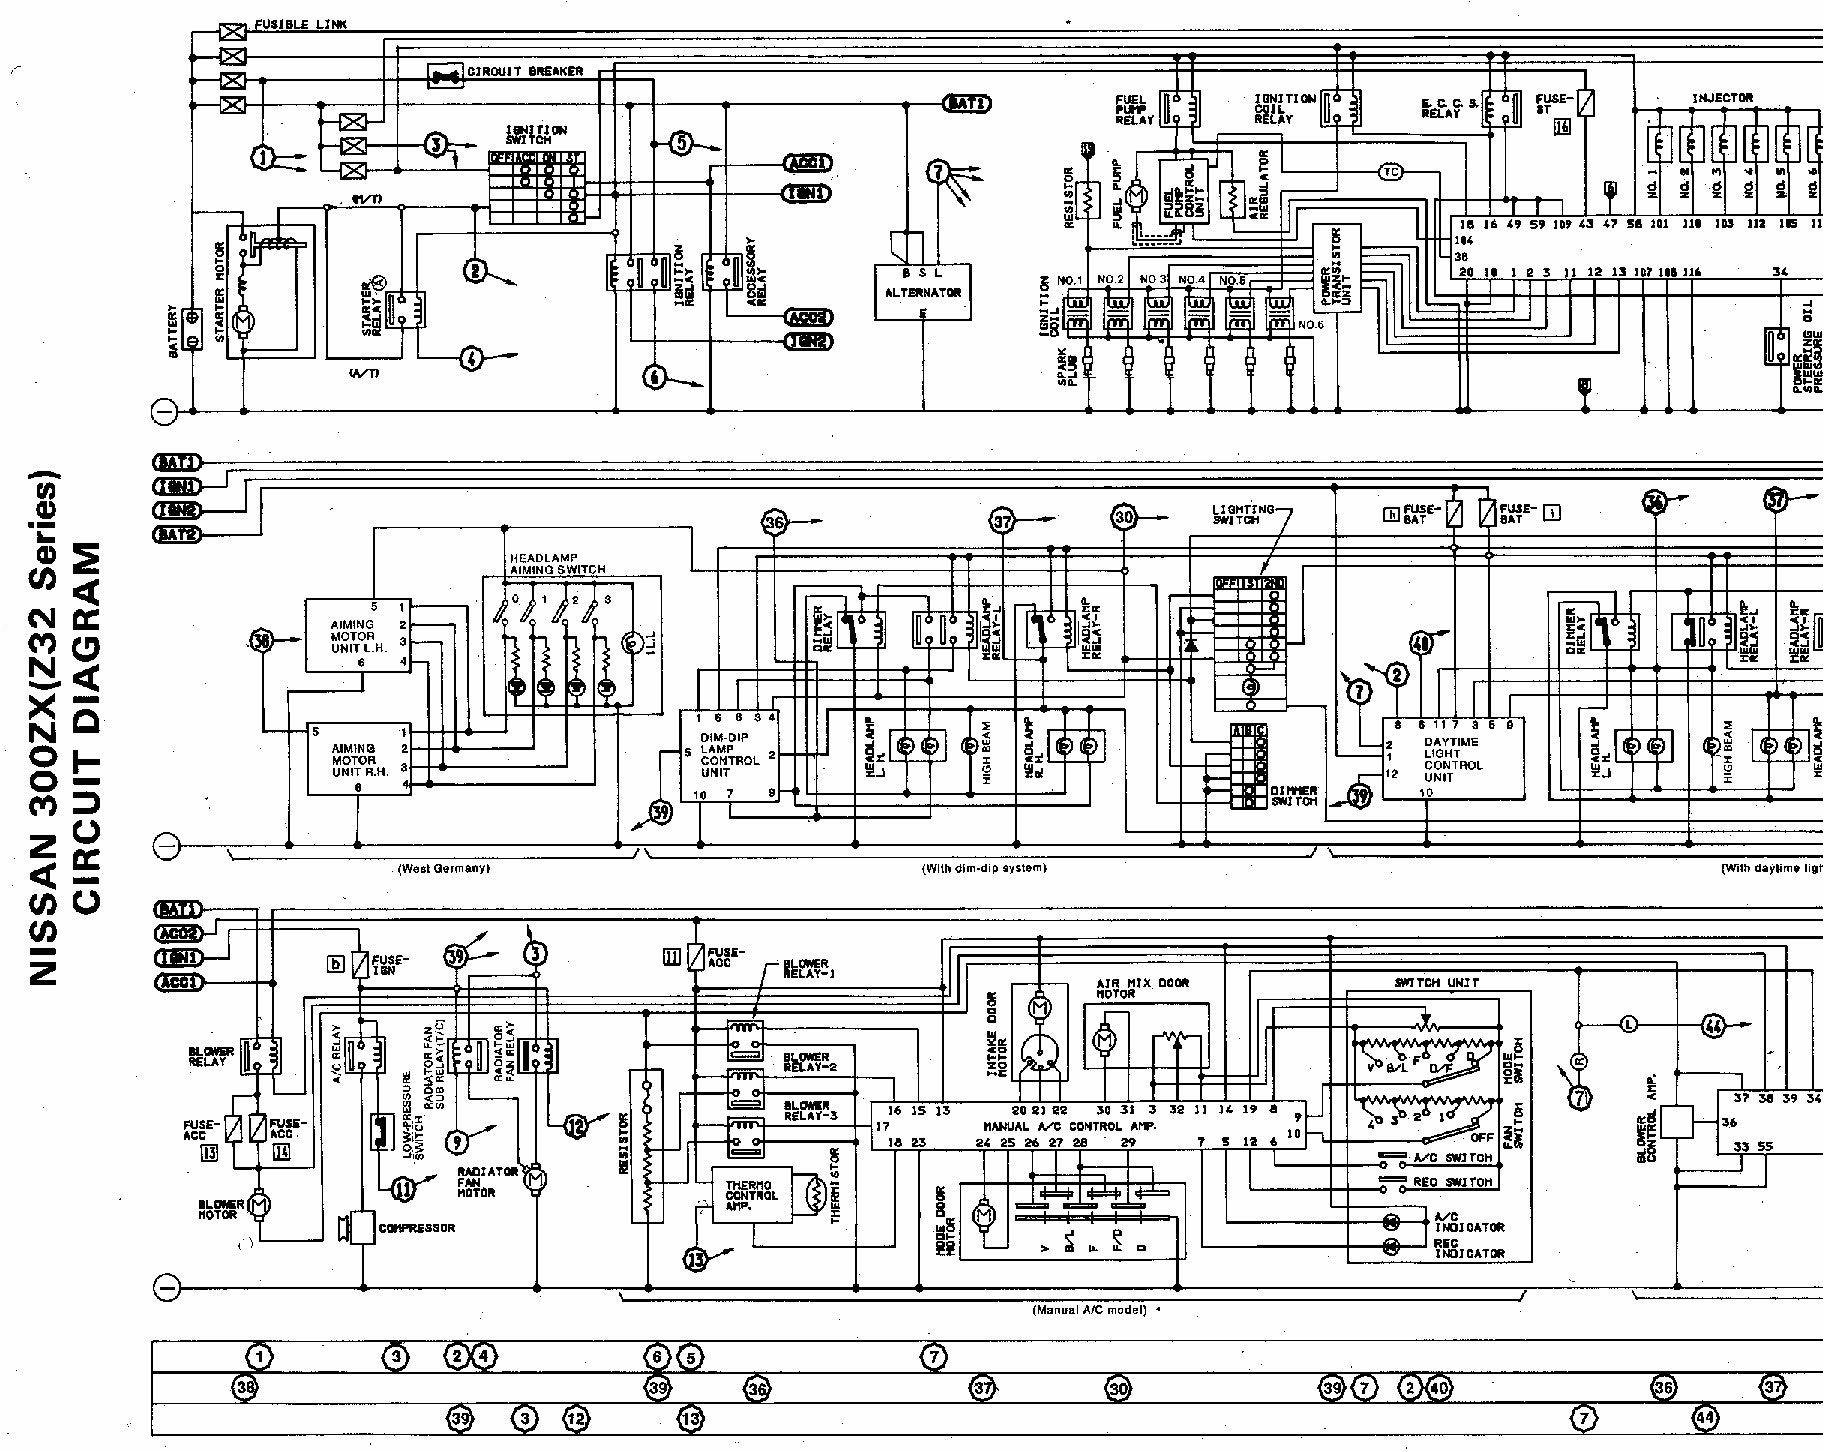 nissan navara radio wiring diagram d40 home wiring diagram wiring diagram for nissan navara d40 stereo